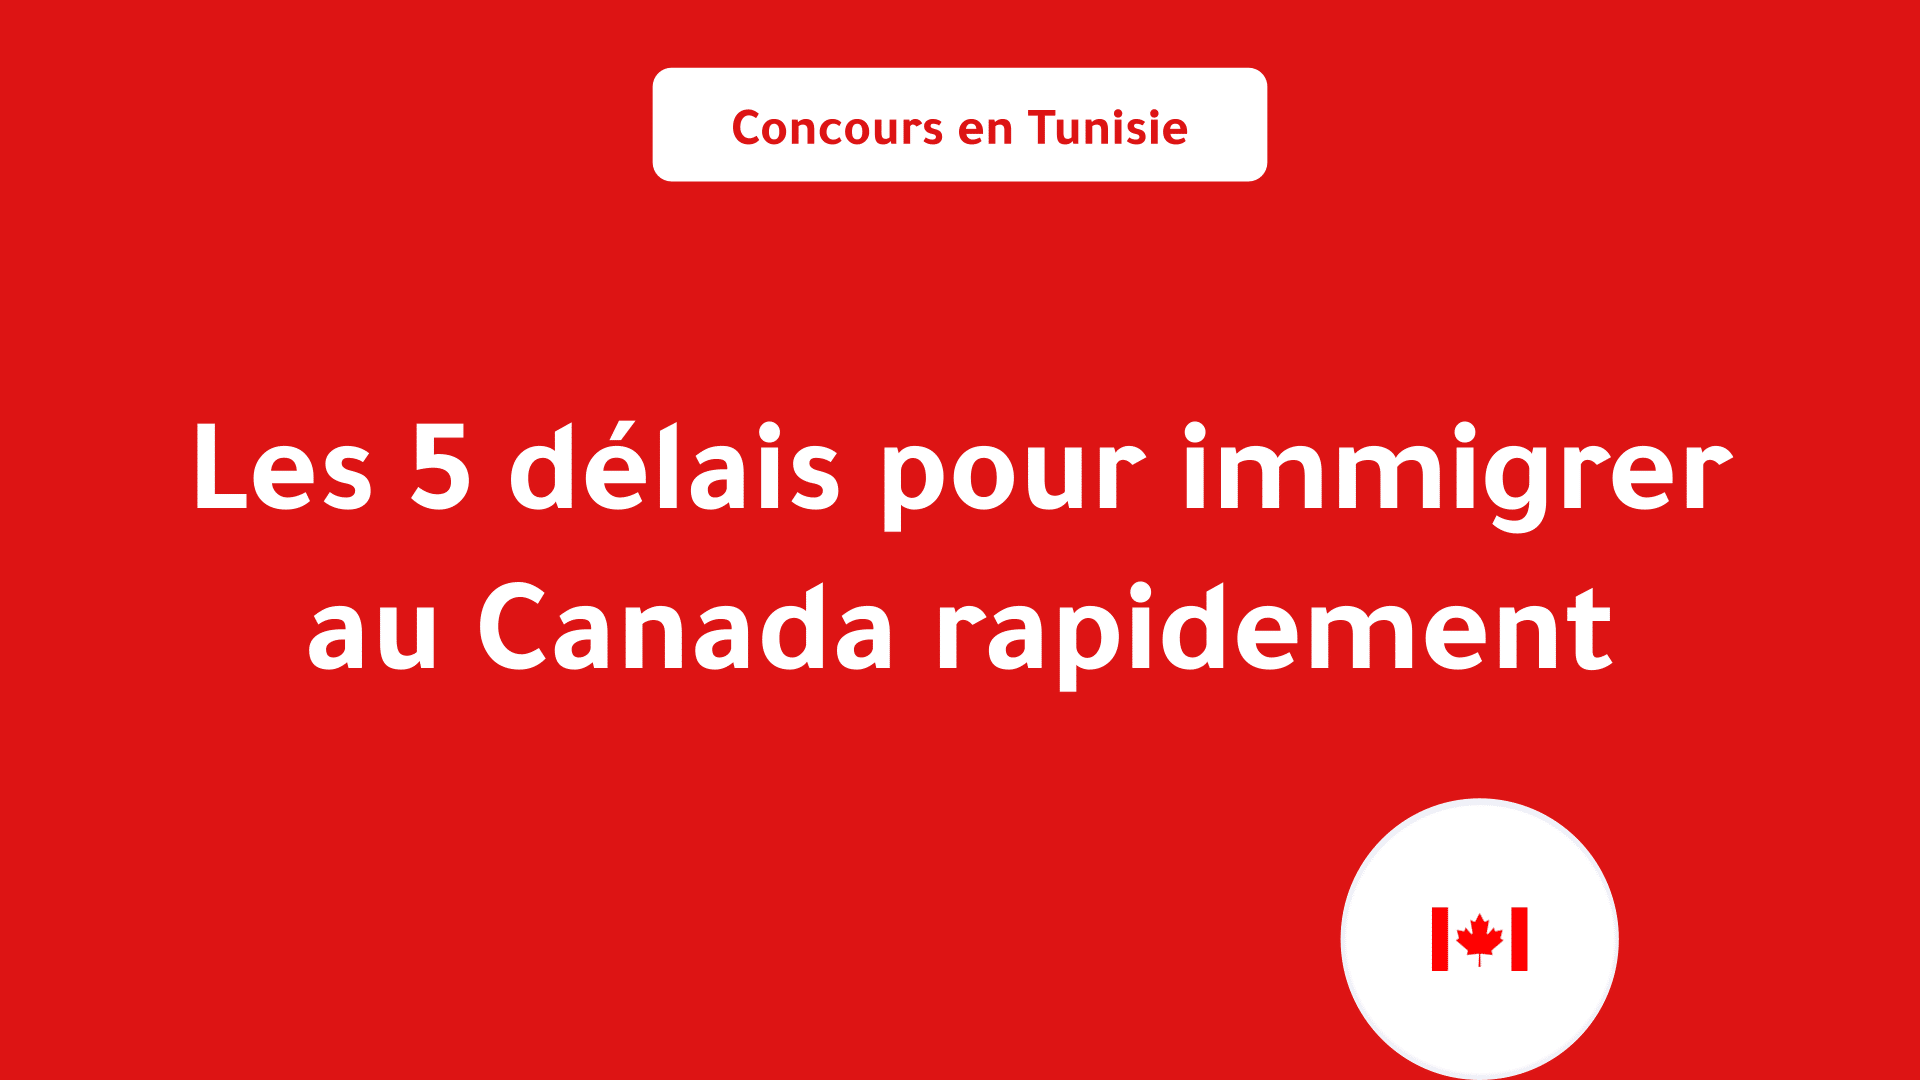 immigrer au Canada rapidement